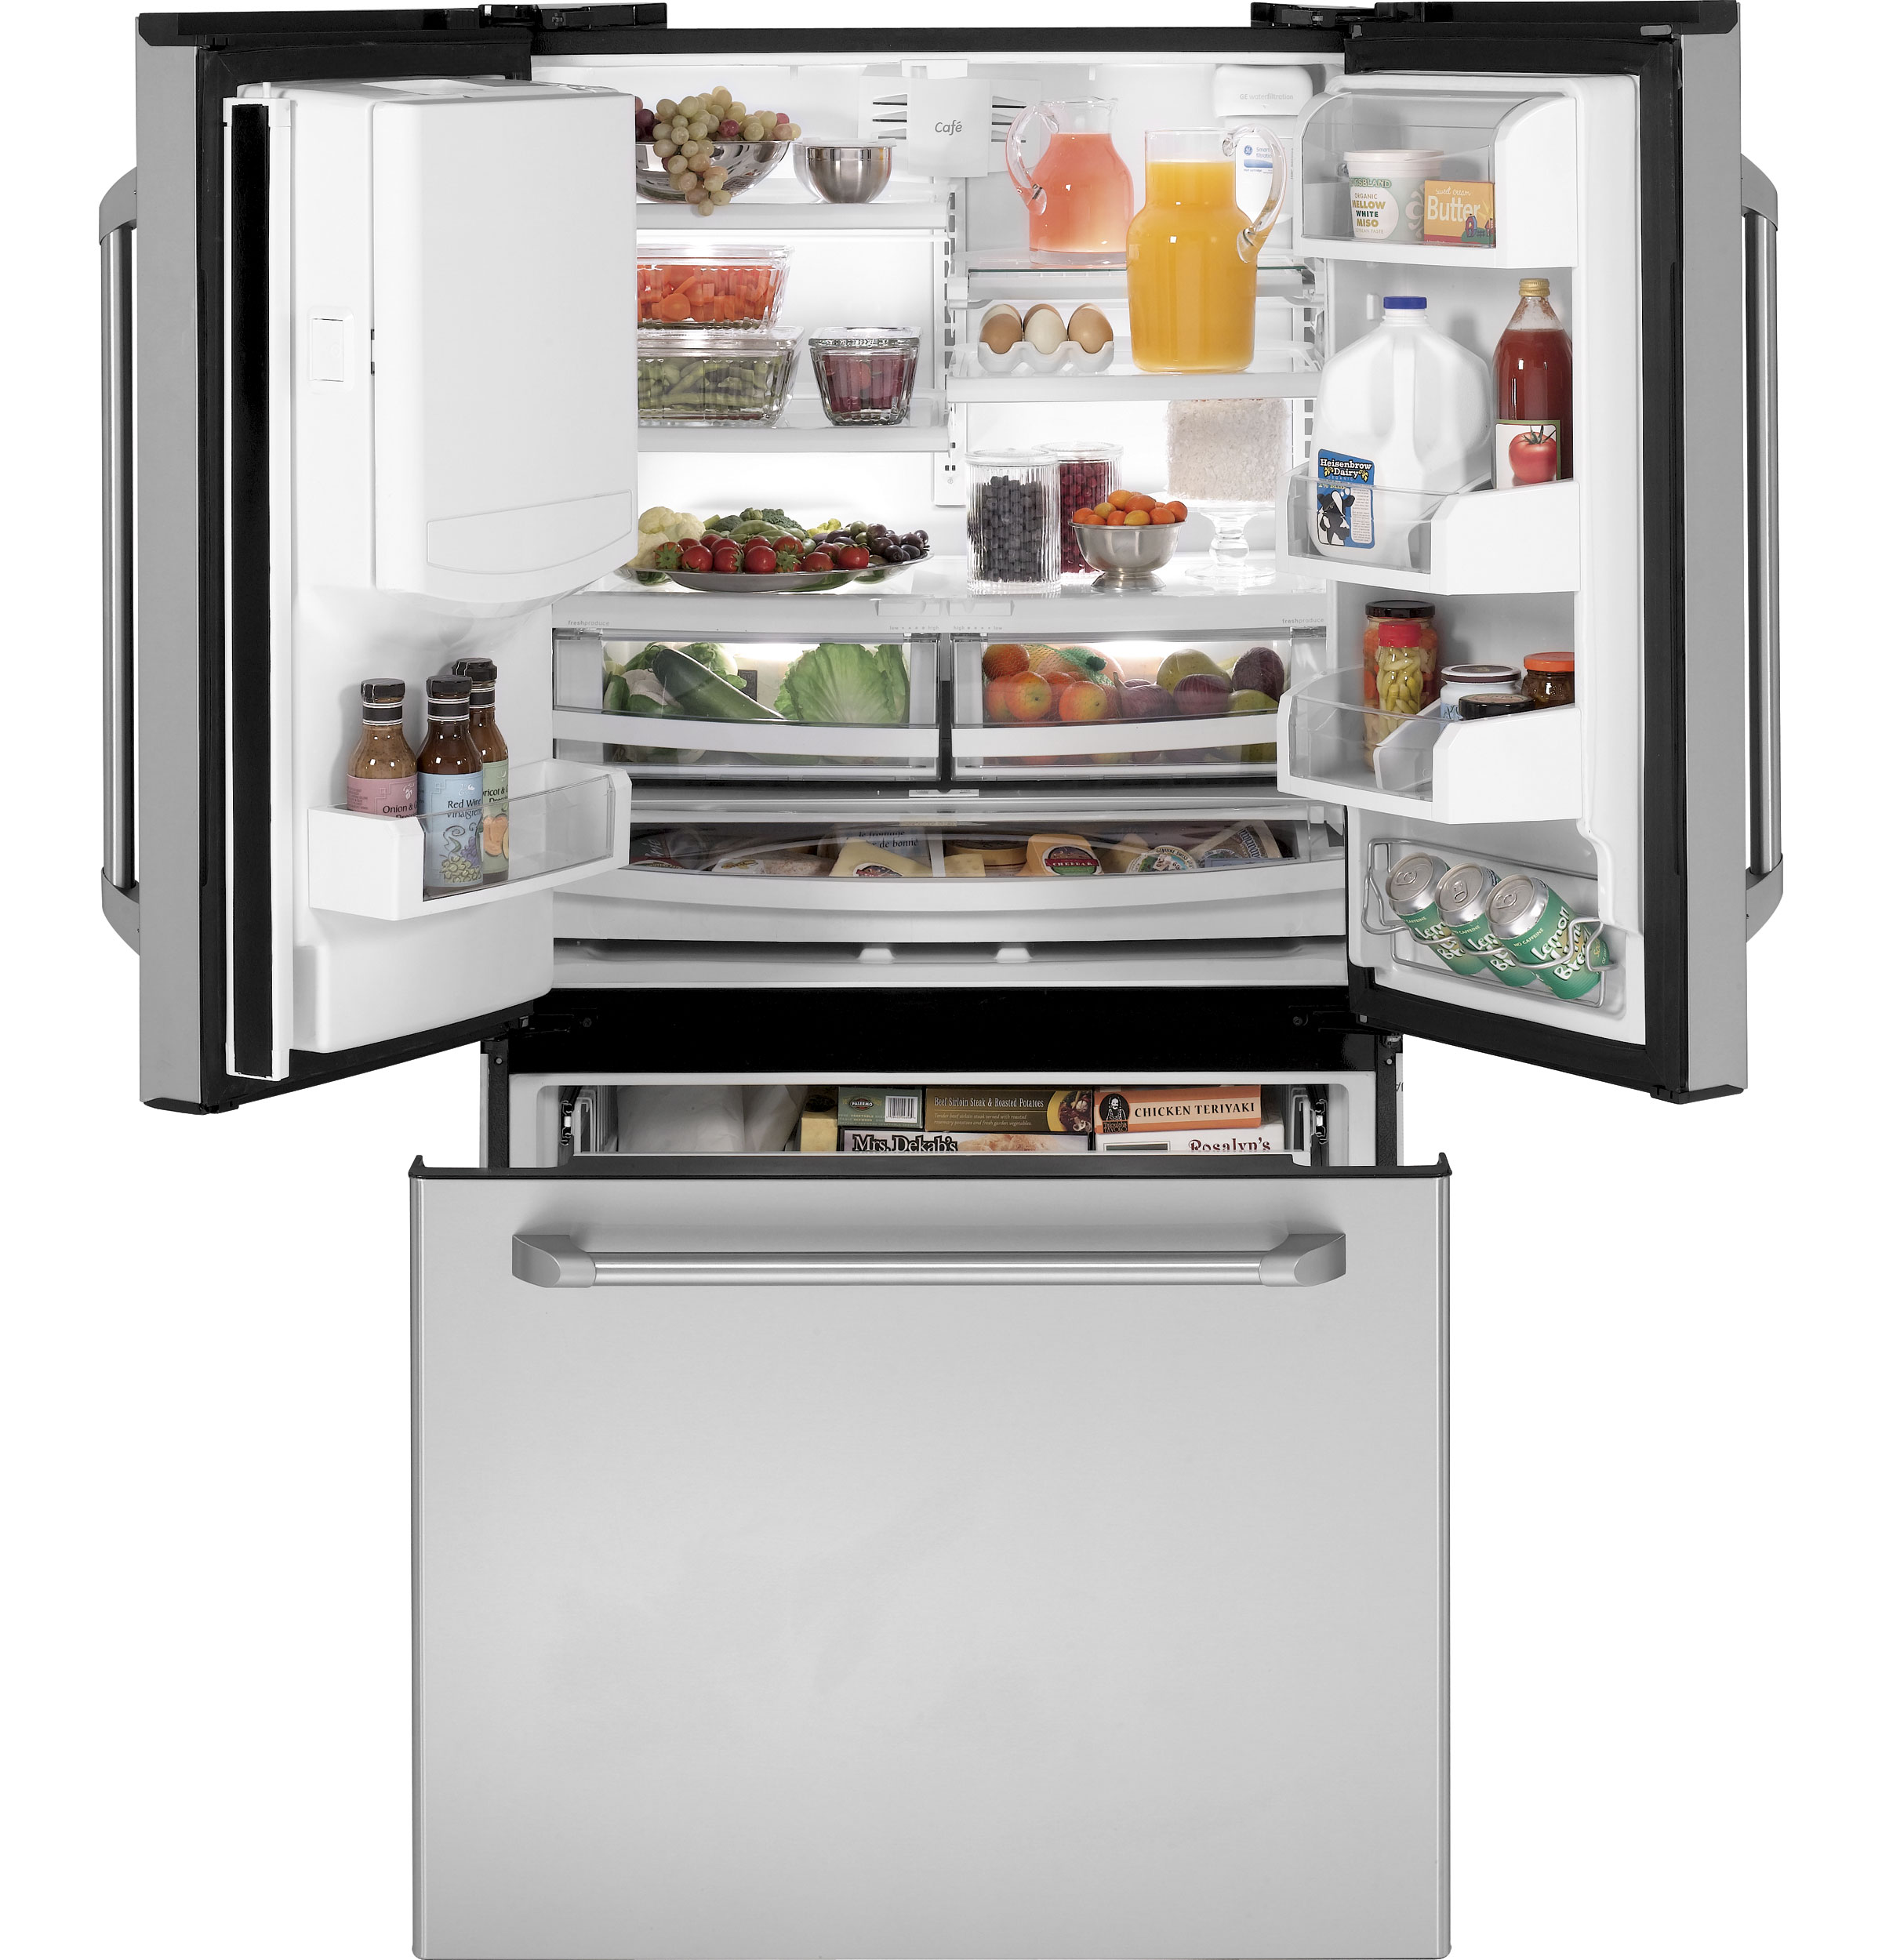 GE Café™ Series ENERGY STAR® 25.1 Cu. Ft. French-Door Refrigerator